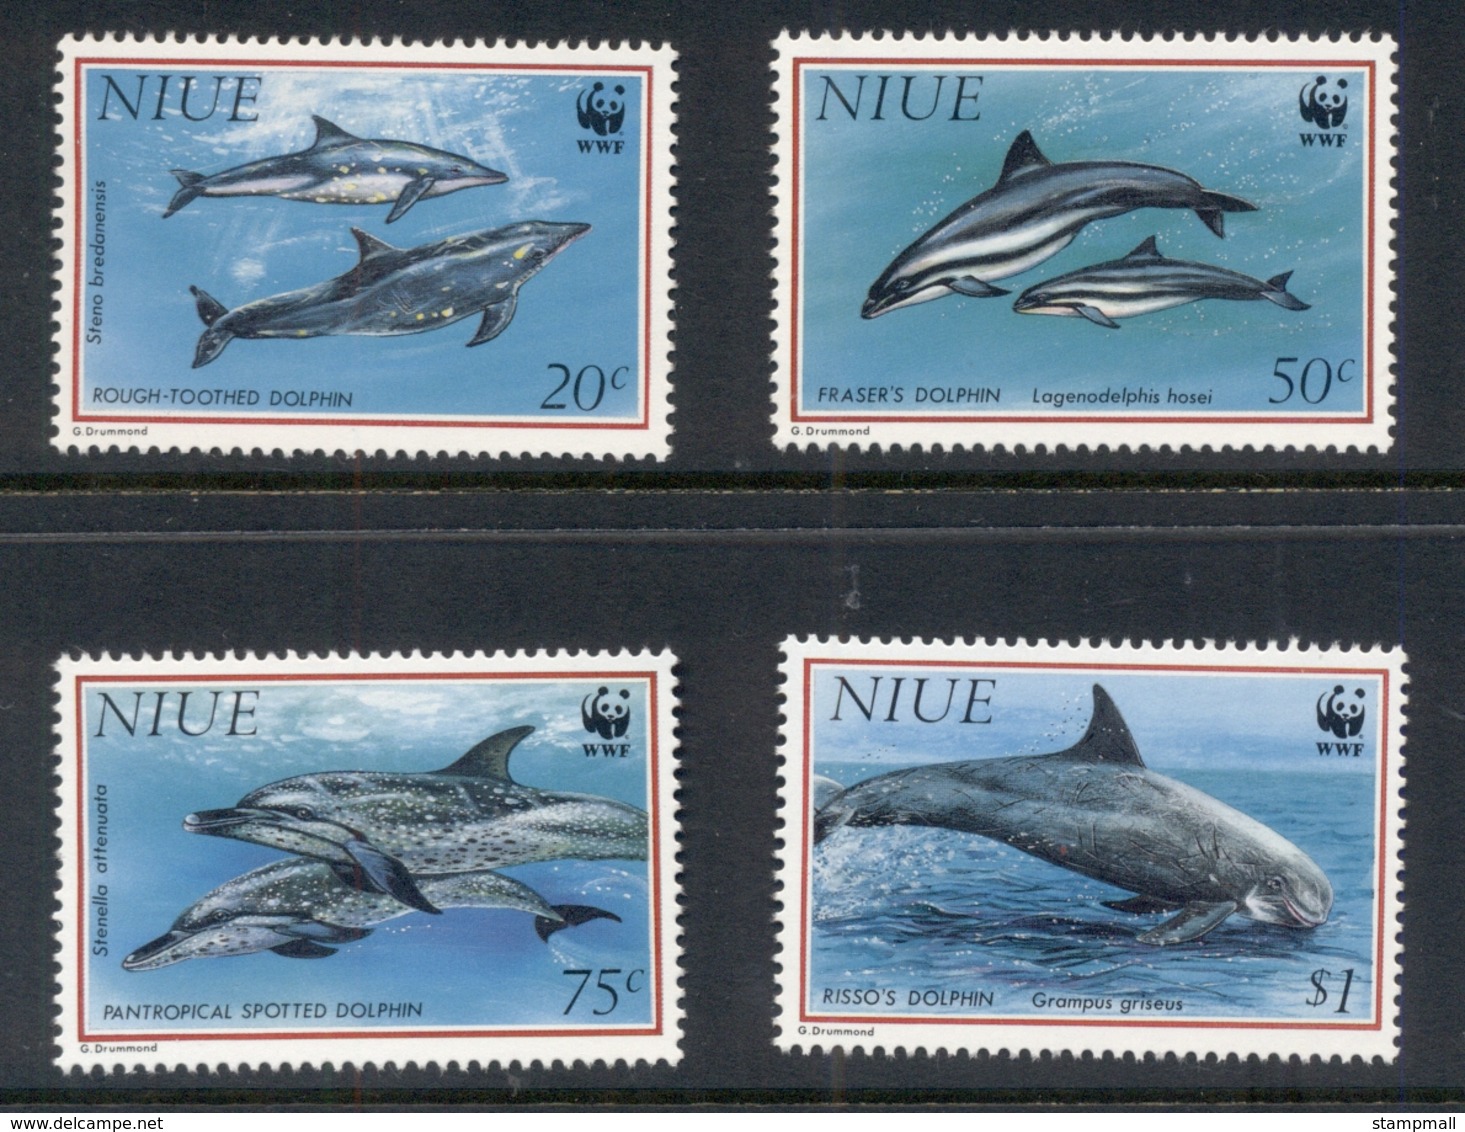 Niue 1993 WWF Marine Life, Dolphin MUH - Niue